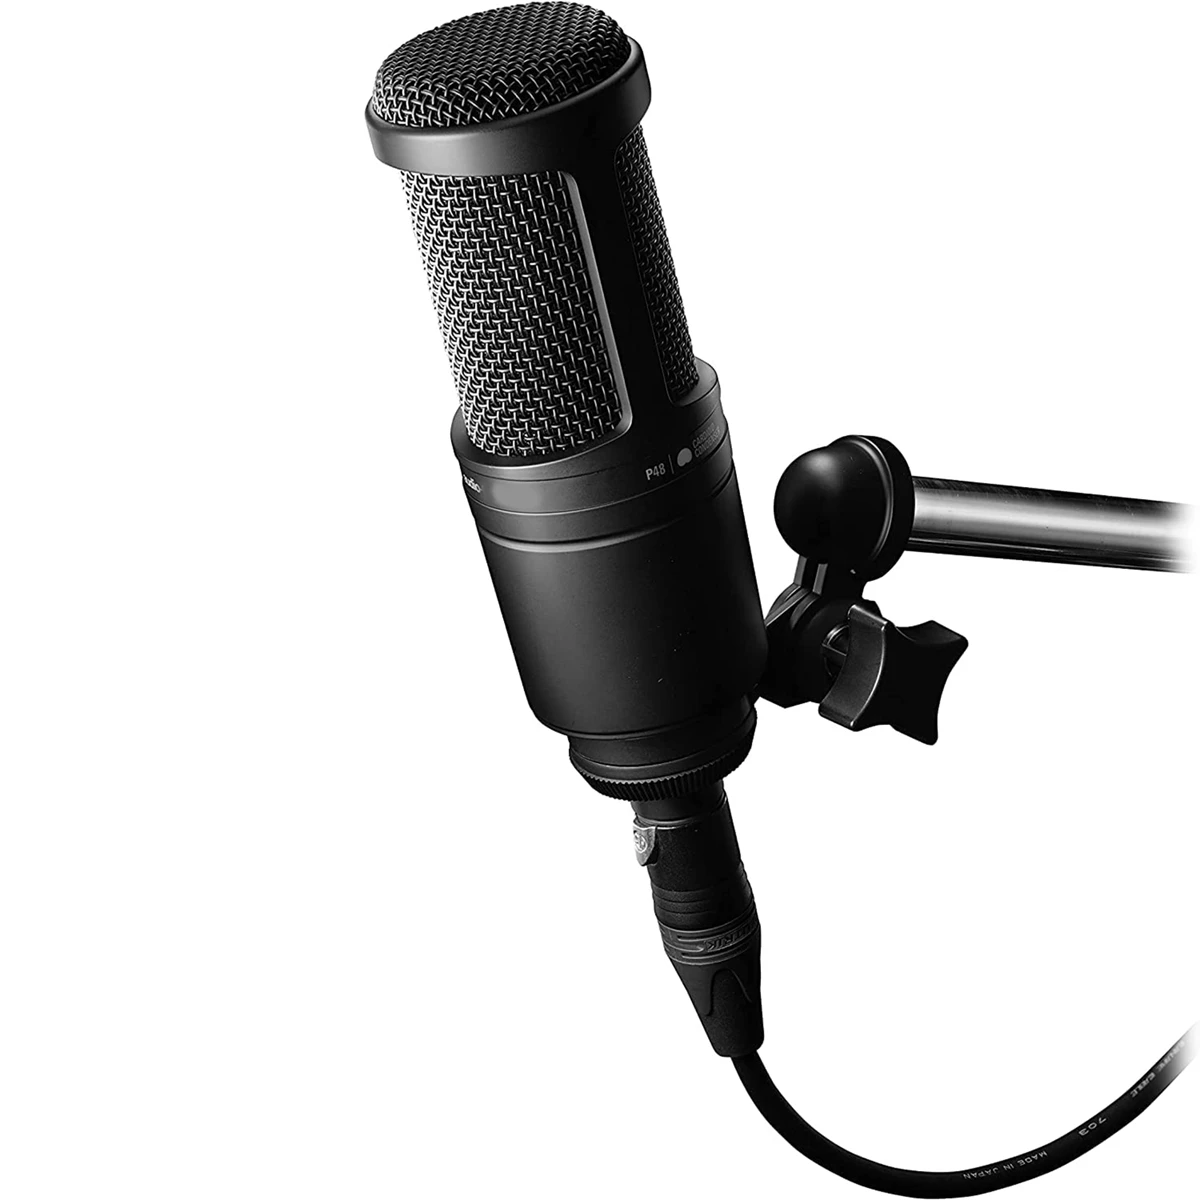 Avdio AT2020 Cardioid Kondenzatorski Mikrofon 20-20000Hz Tri Pin XLRM Moški Mikrofon za Snemanje Sidro Karaoke MIC - 2